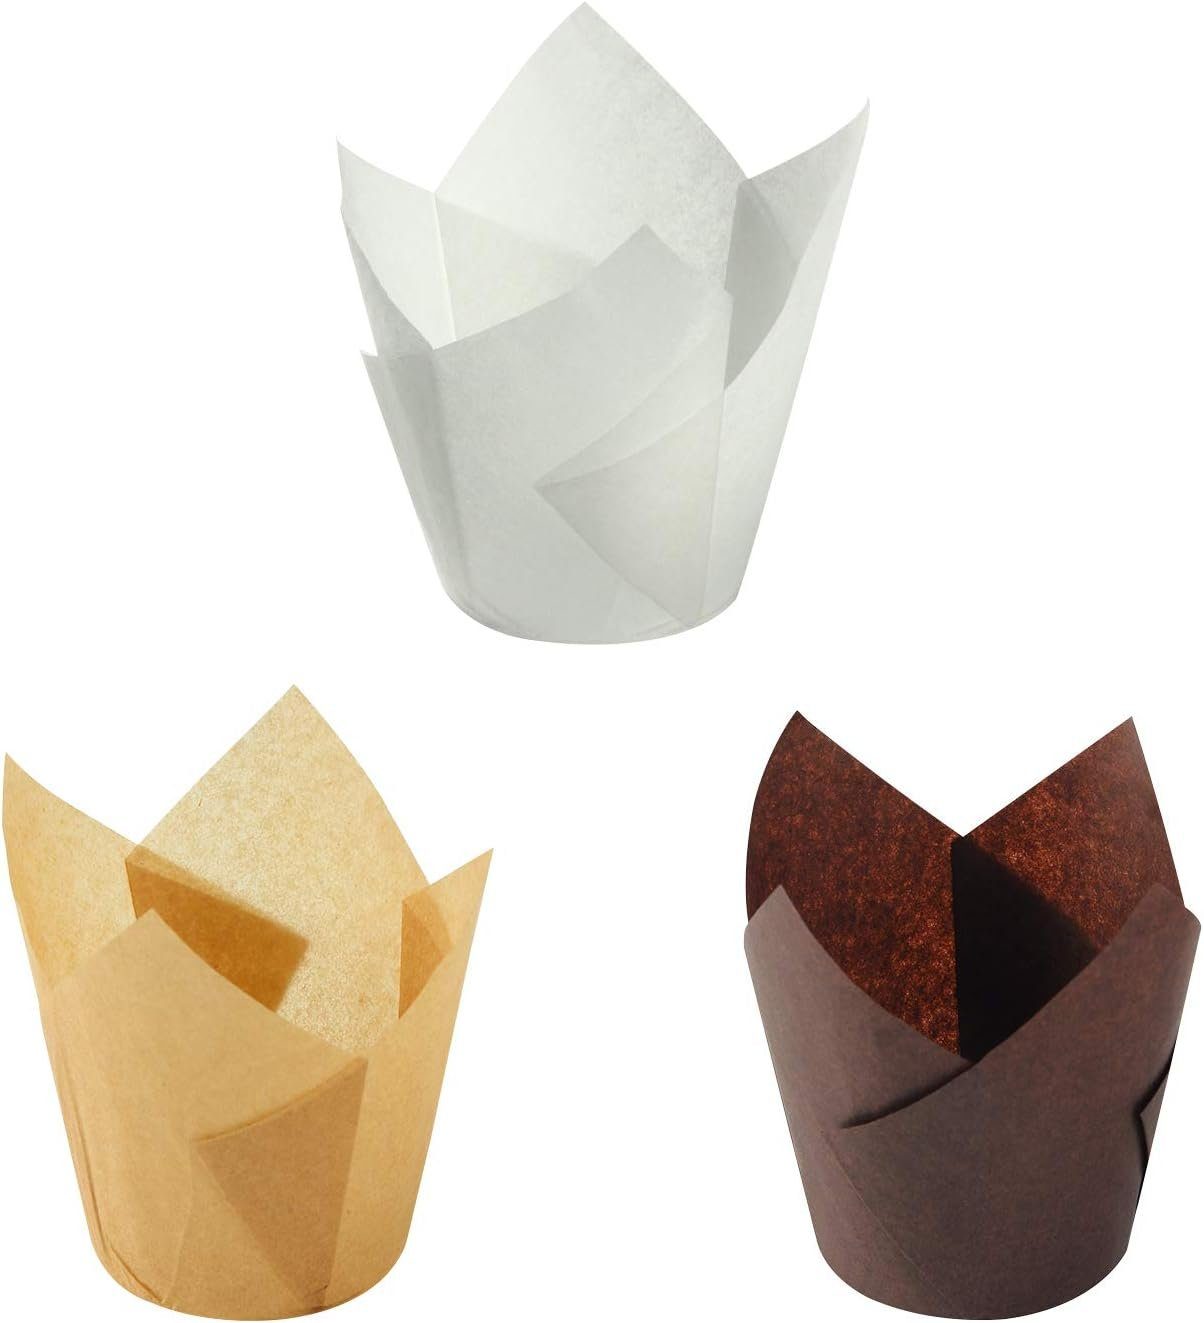 Jormftte Backform Backförmchen Tulpen Muffinform Papier Cupcake Liner für Hochzeit Party Dunkler Kaffee,heller Kaffee,Weiß | Kuchenformen